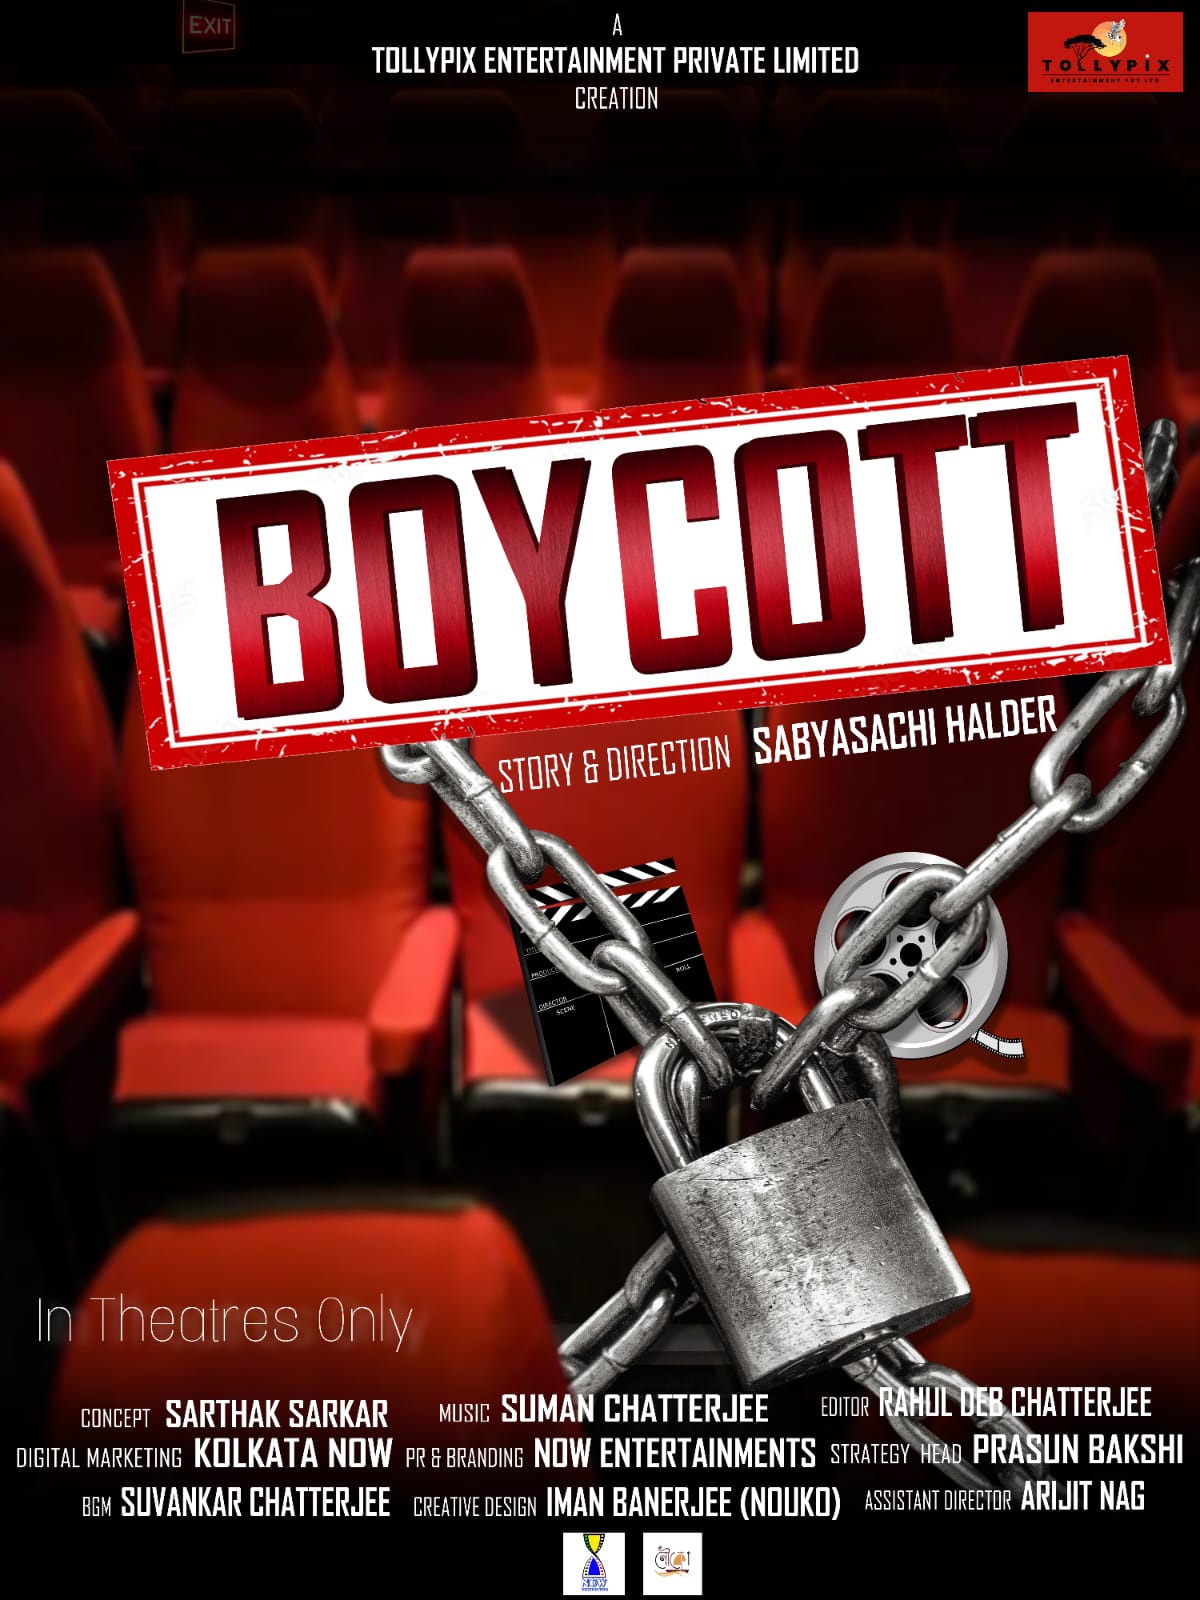 New Bengali Film Boycott